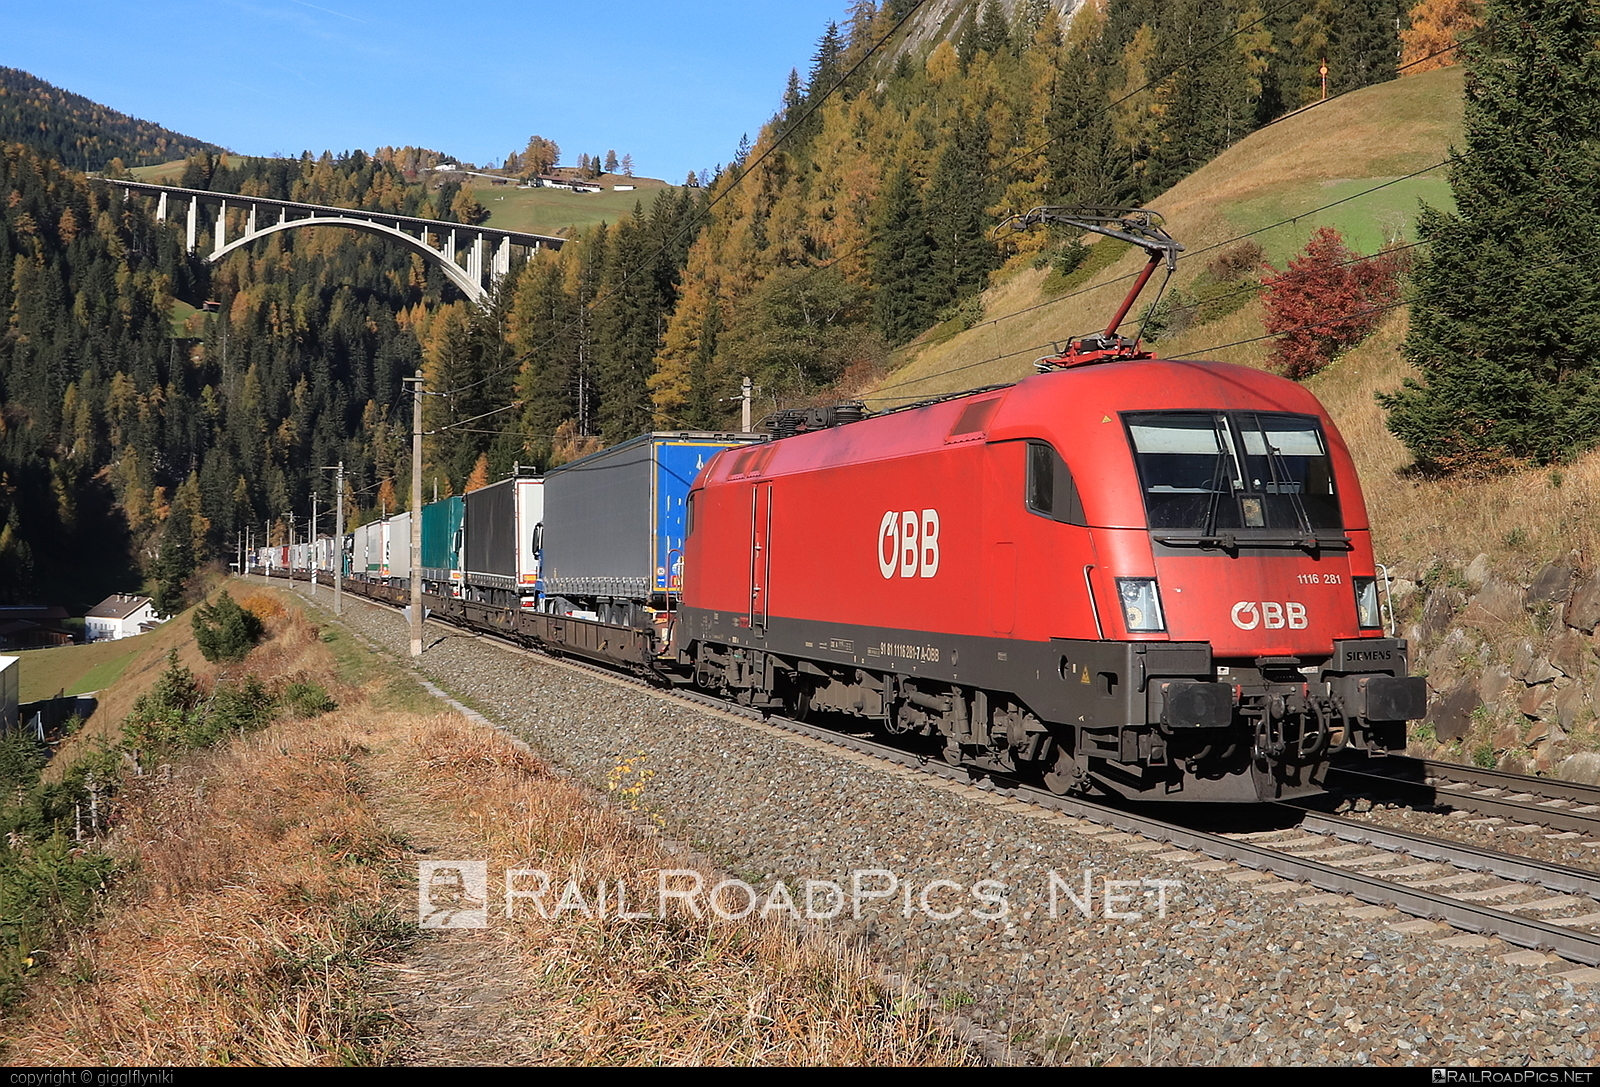 Siemens ES 64 U2 - 1116 281 operated by Rail Cargo Austria AG #es64 #es64u2 #eurosprinter #flatwagon #obb #osterreichischebundesbahnen #rcw #siemens #siemensEs64 #siemensEs64u2 #siemenstaurus #taurus #tauruslocomotive #truck